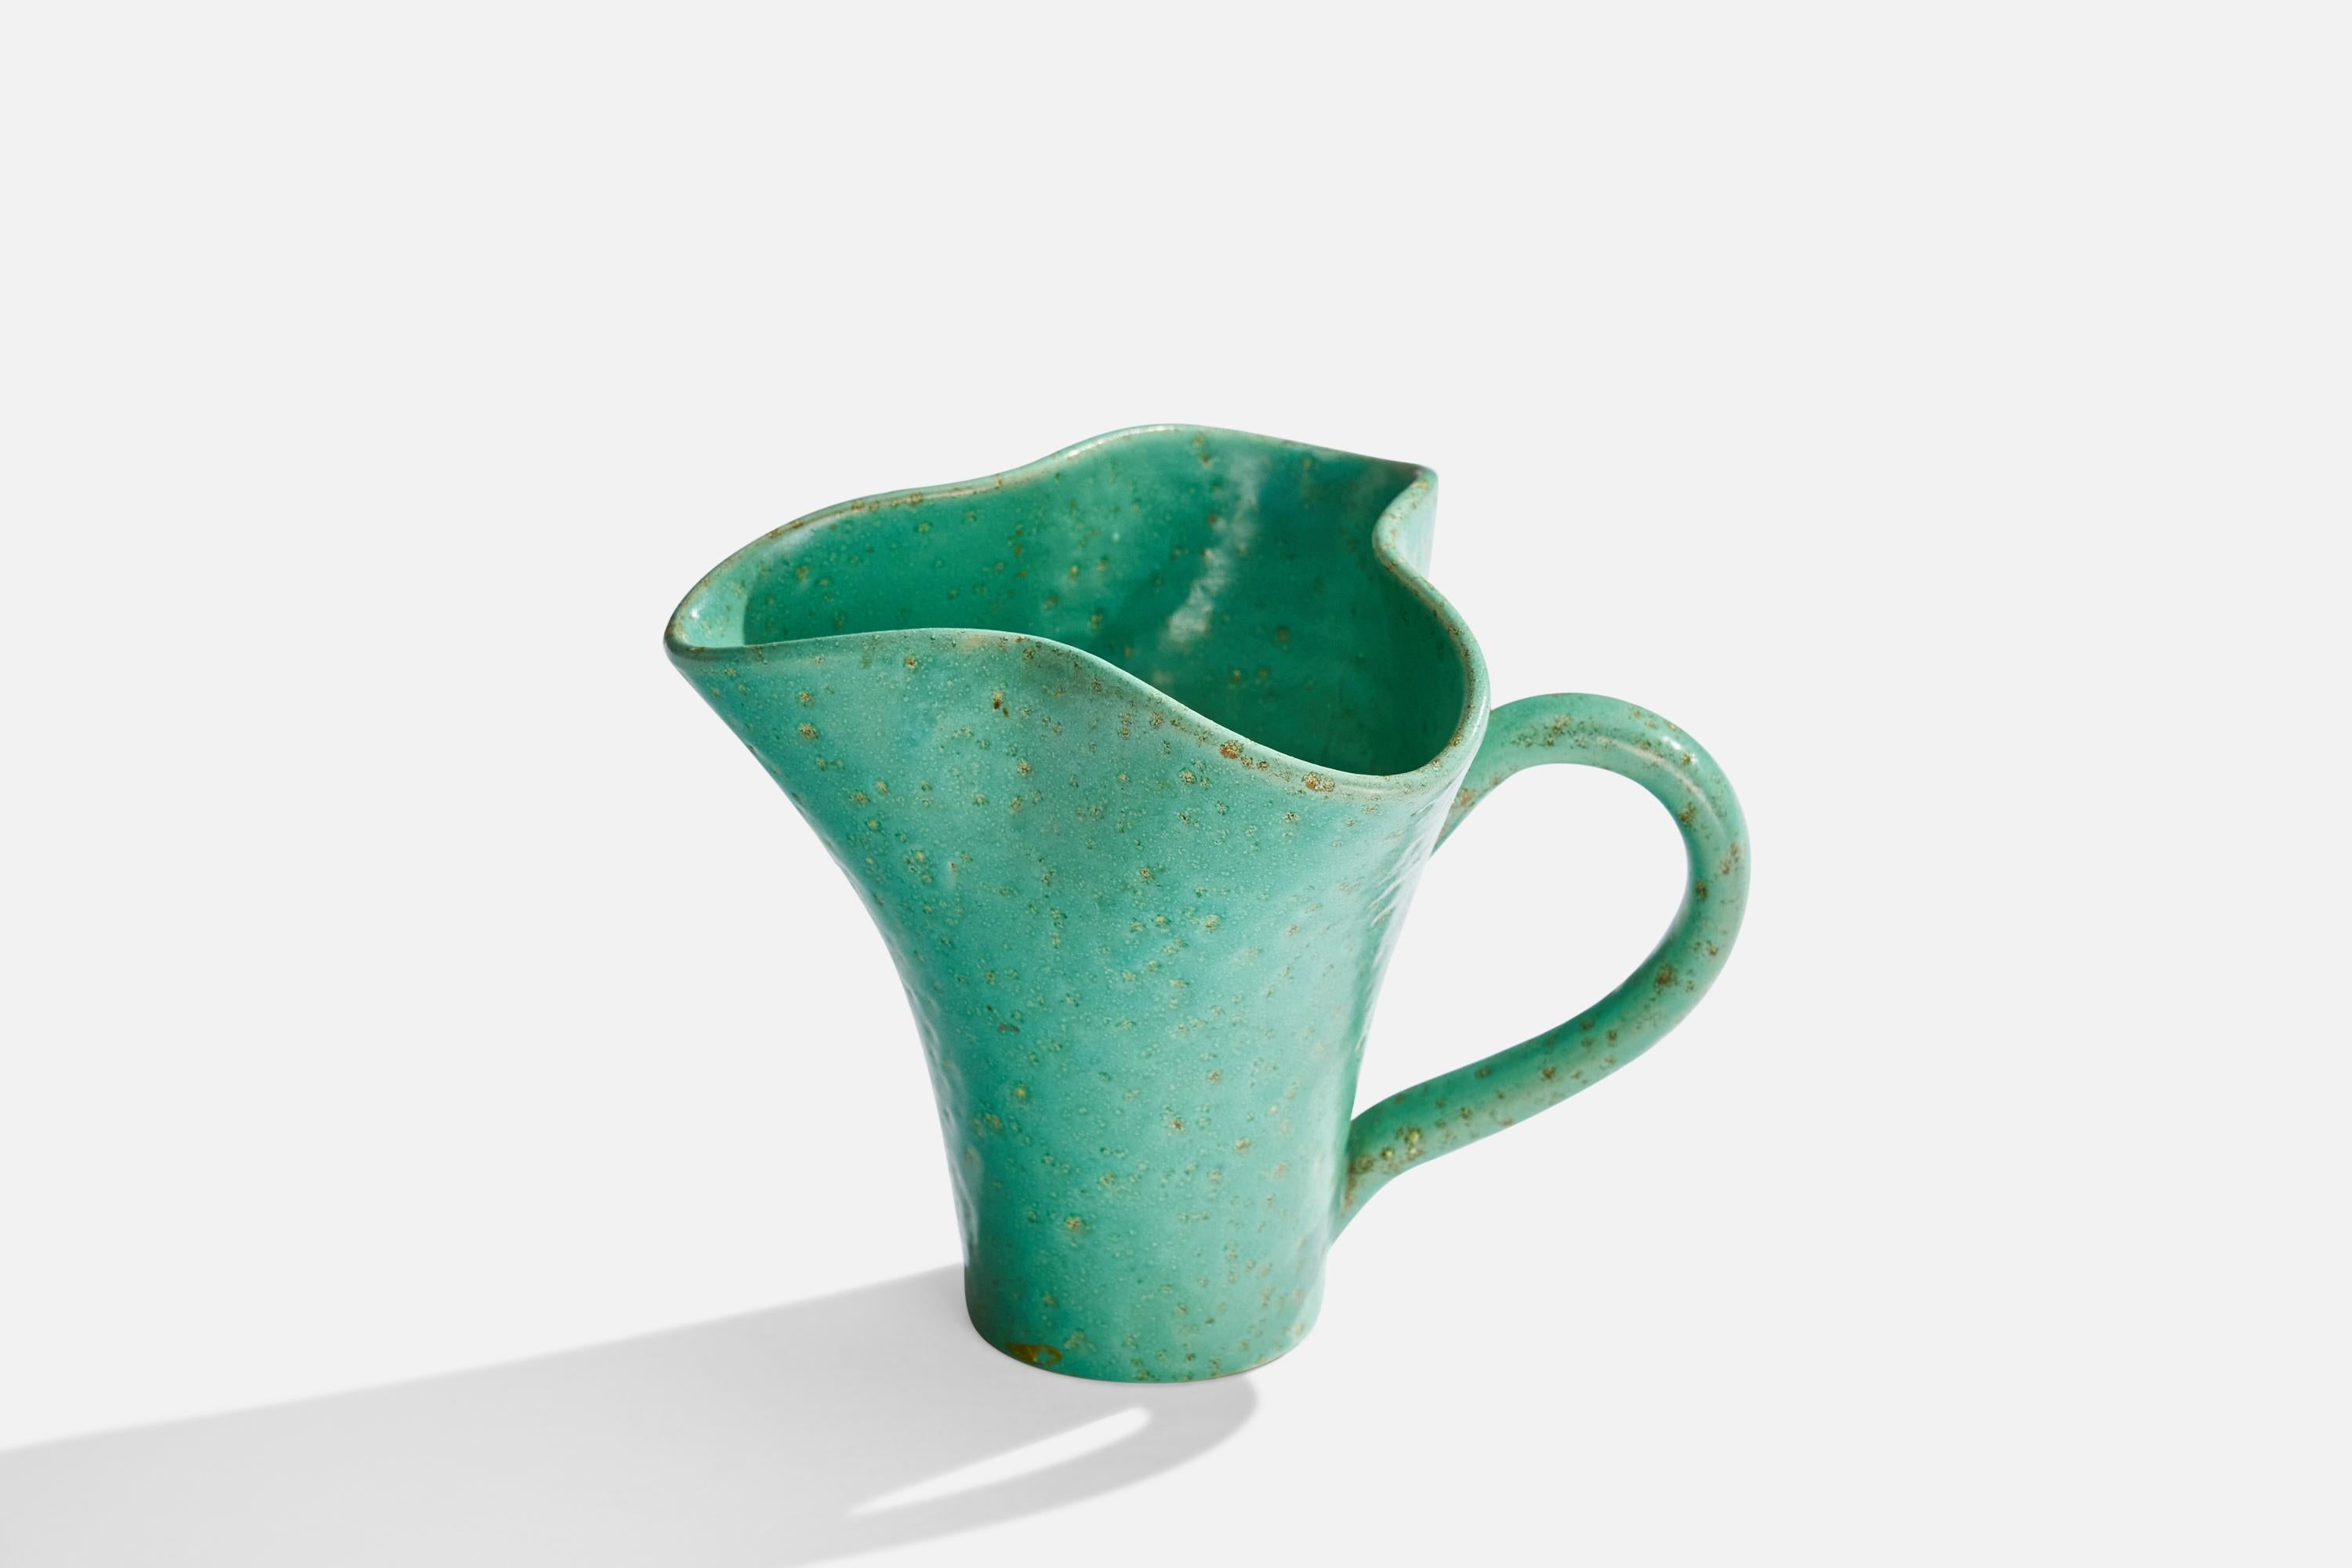 A green-glazed pitcher designed by Jerk Werkmäster and produced by Nittsjö, Sweden, c. 1930s.